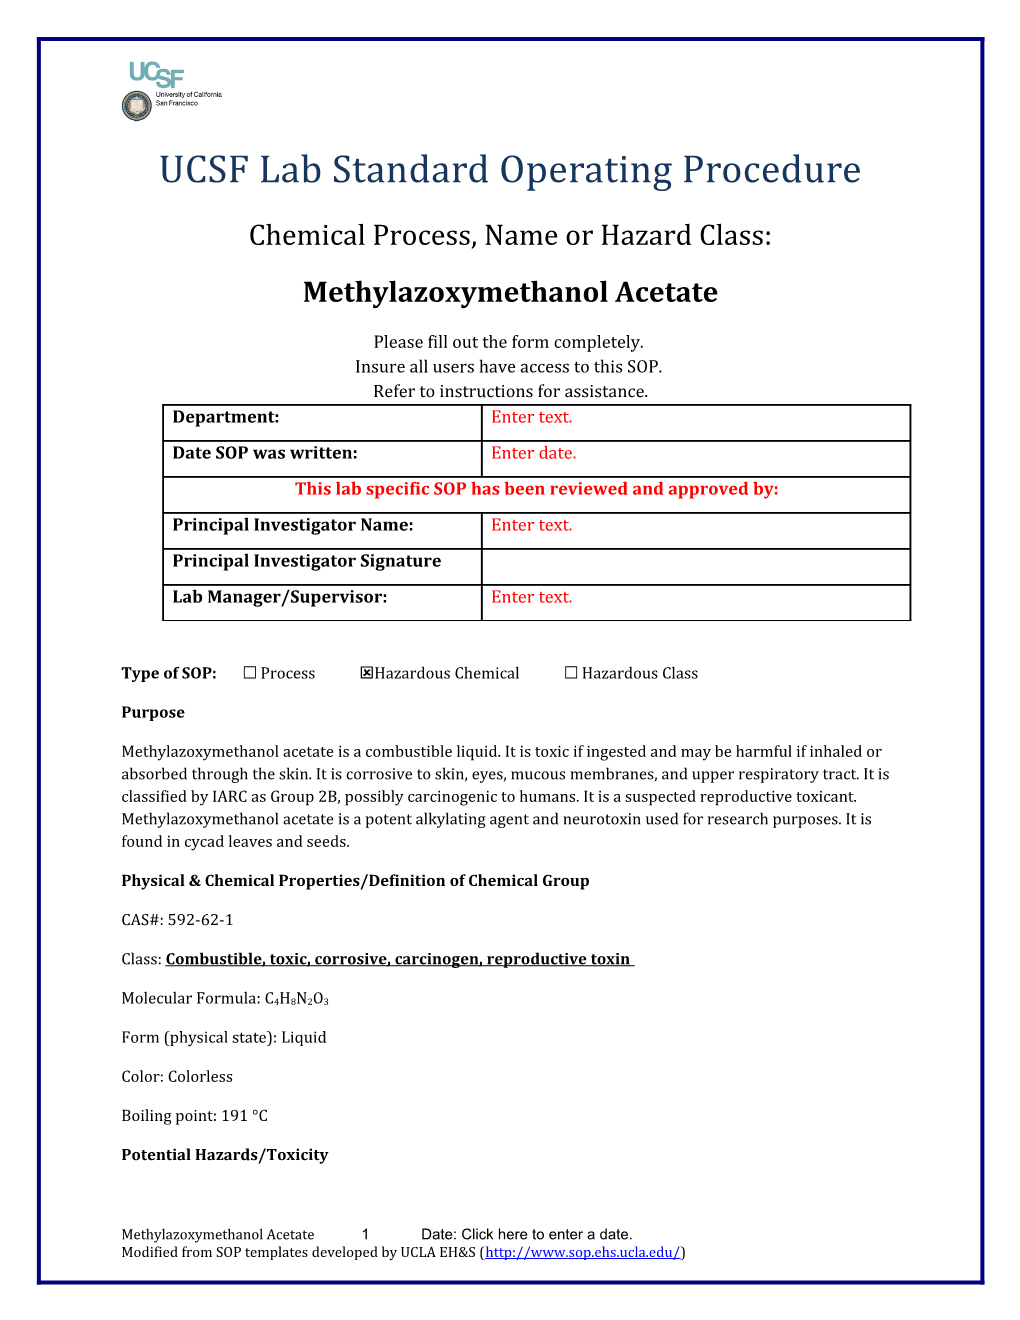 UCSF Lab Standard Operating Procedure s36